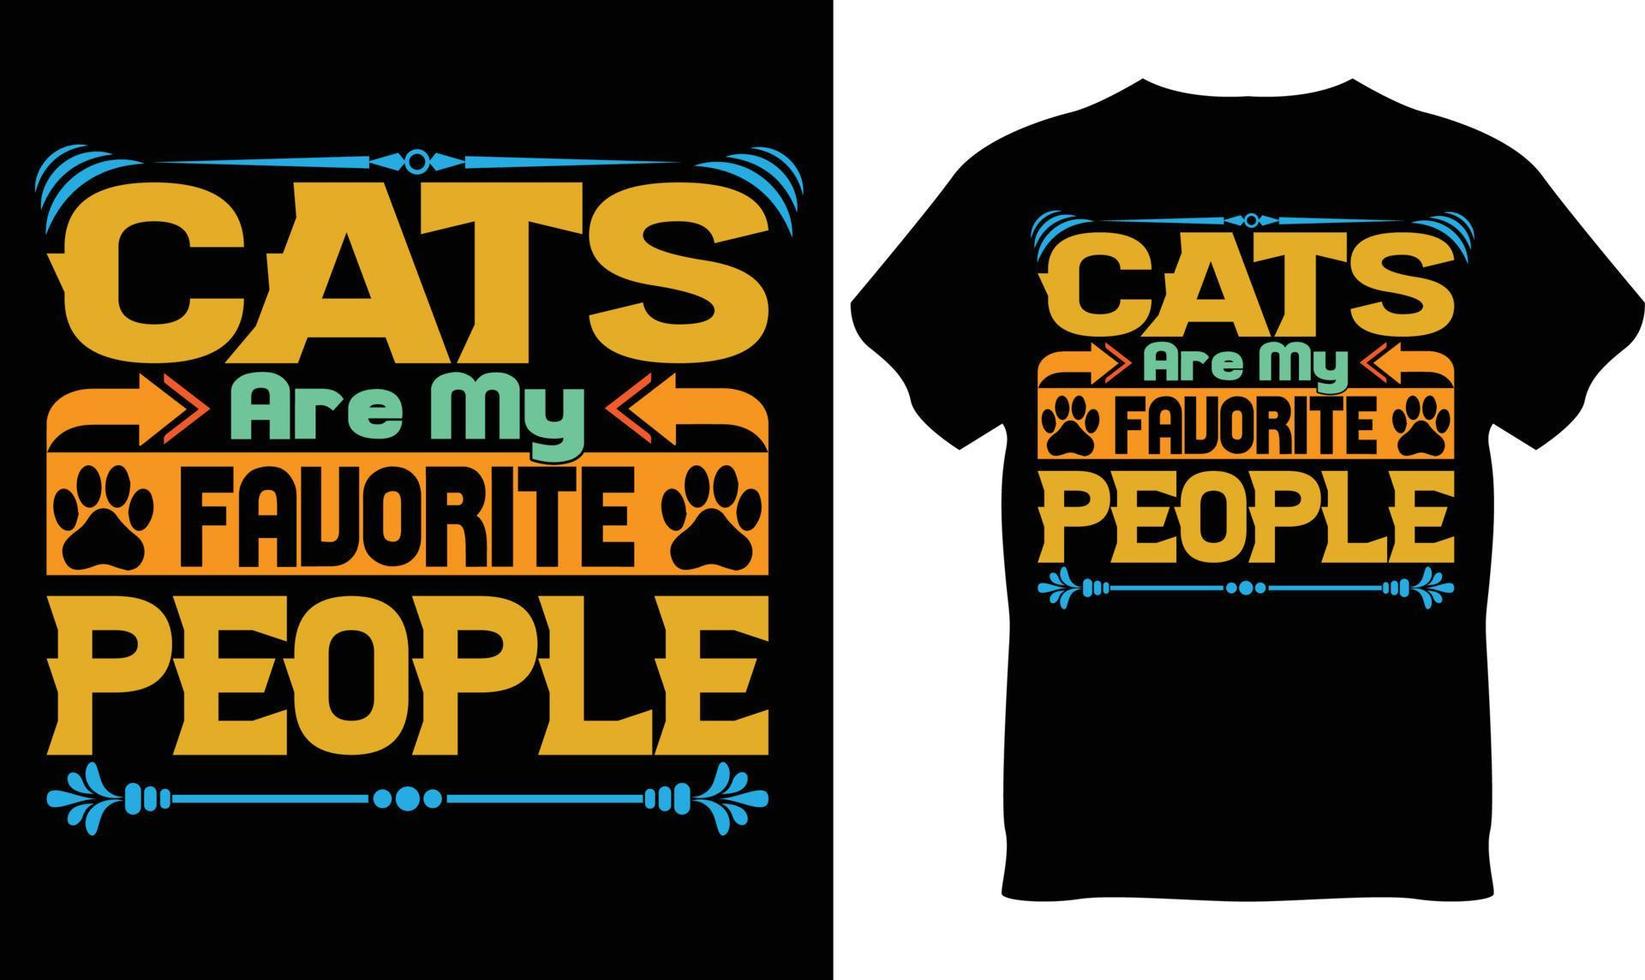 design de camiseta amante de gatos vetor